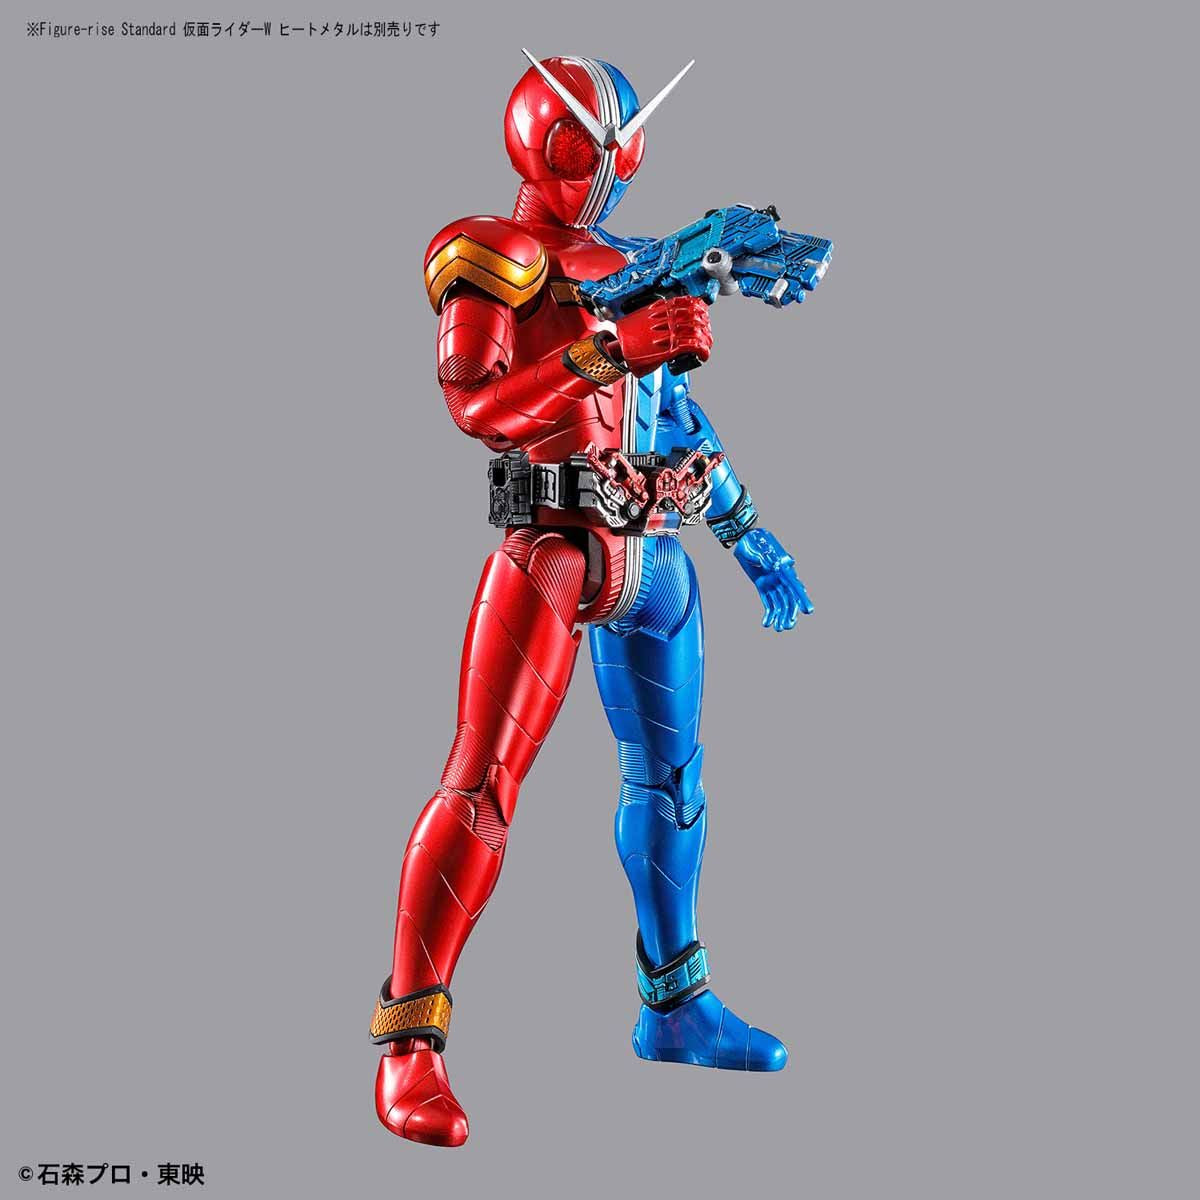 Figure-Rise Standard Kamen Rider Double Lunatrigger